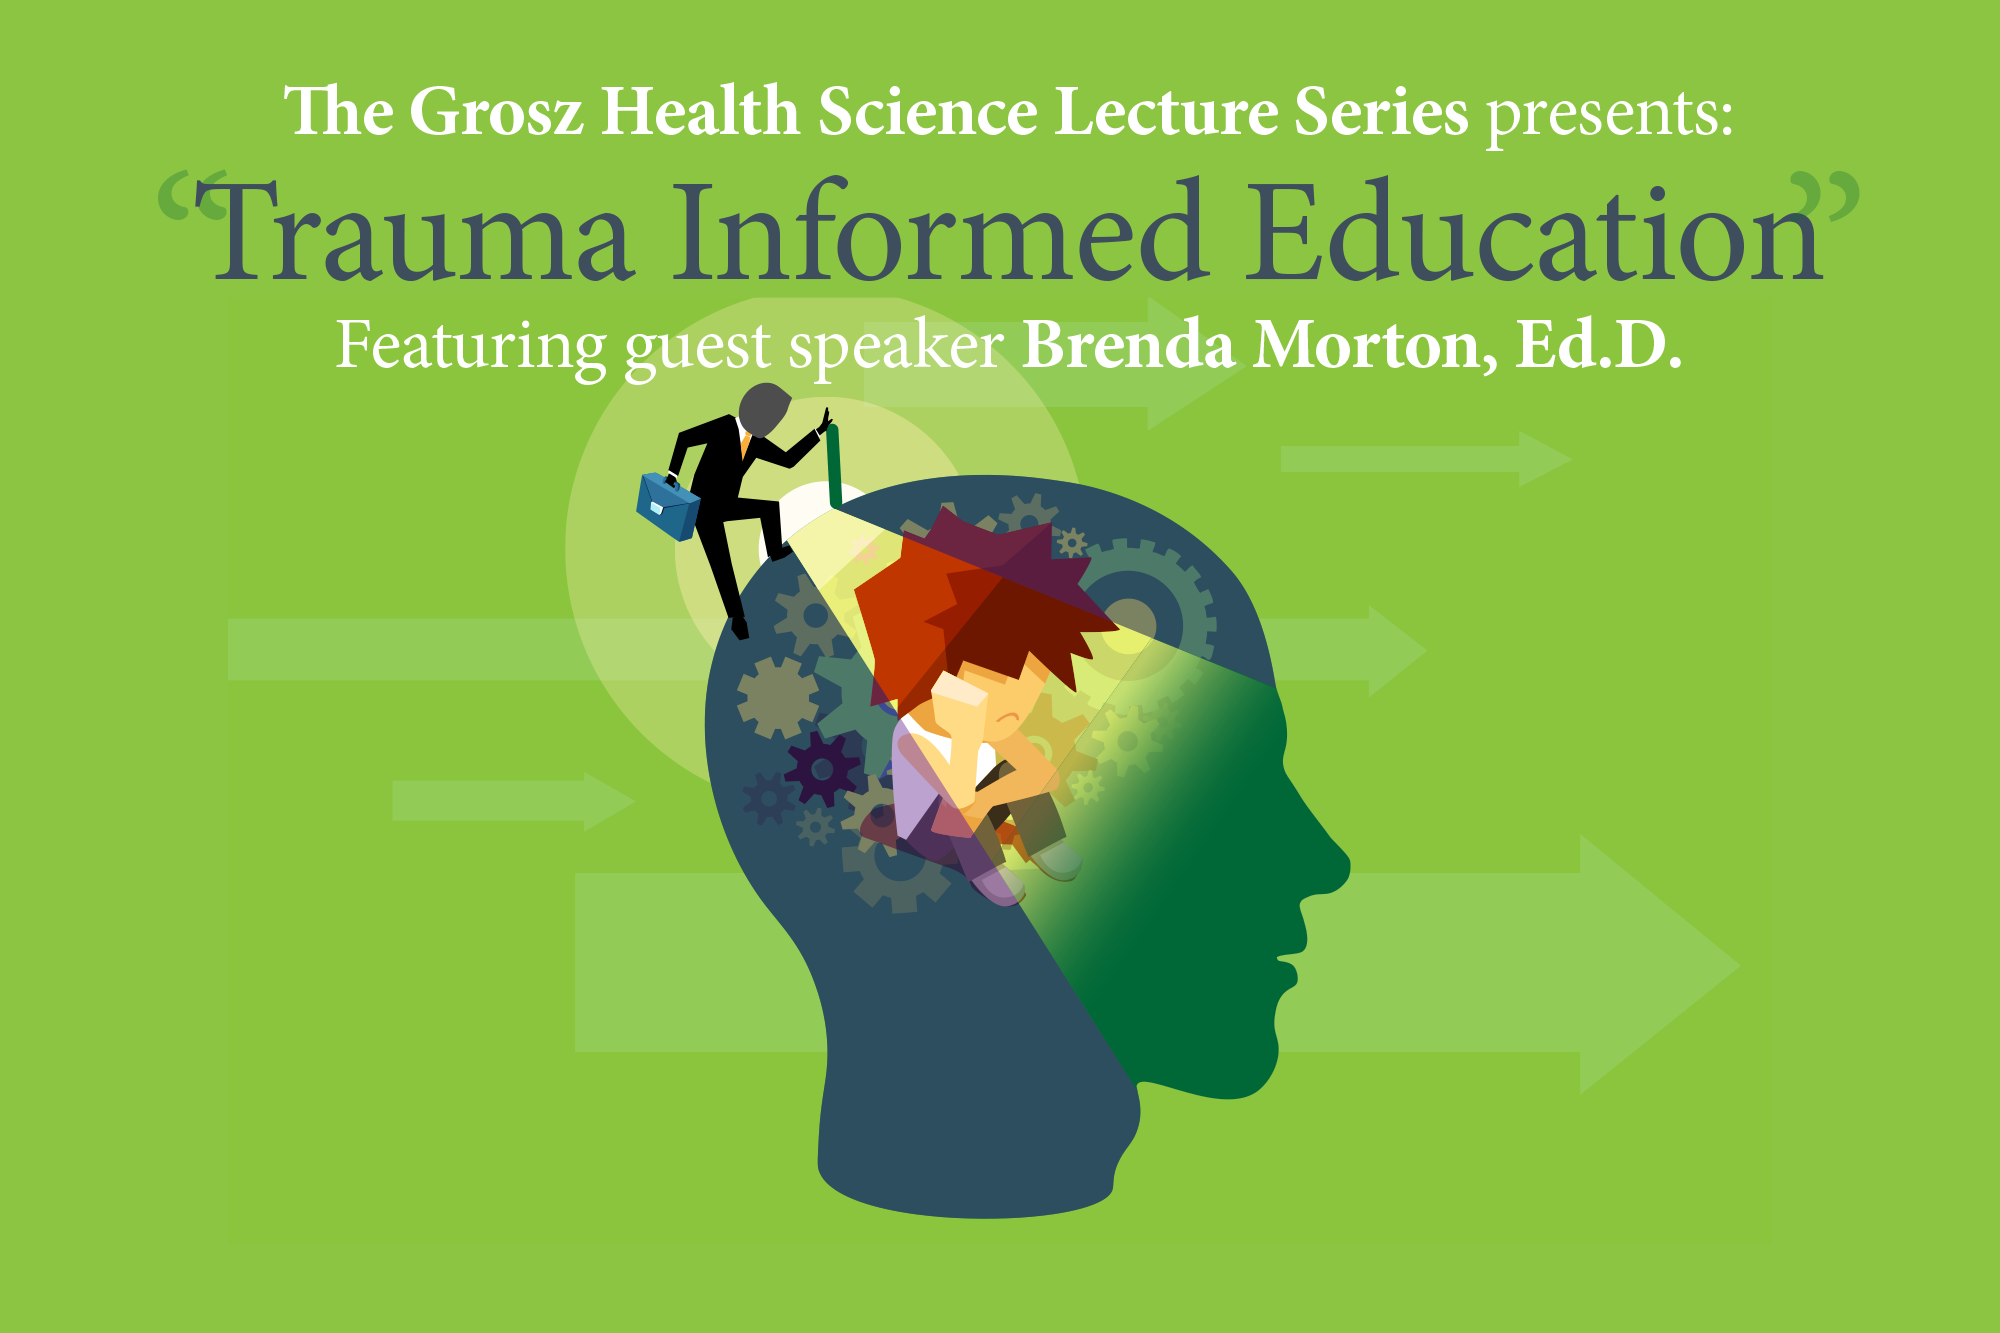 Image to advertise "Trauma Informed Education" presentation.